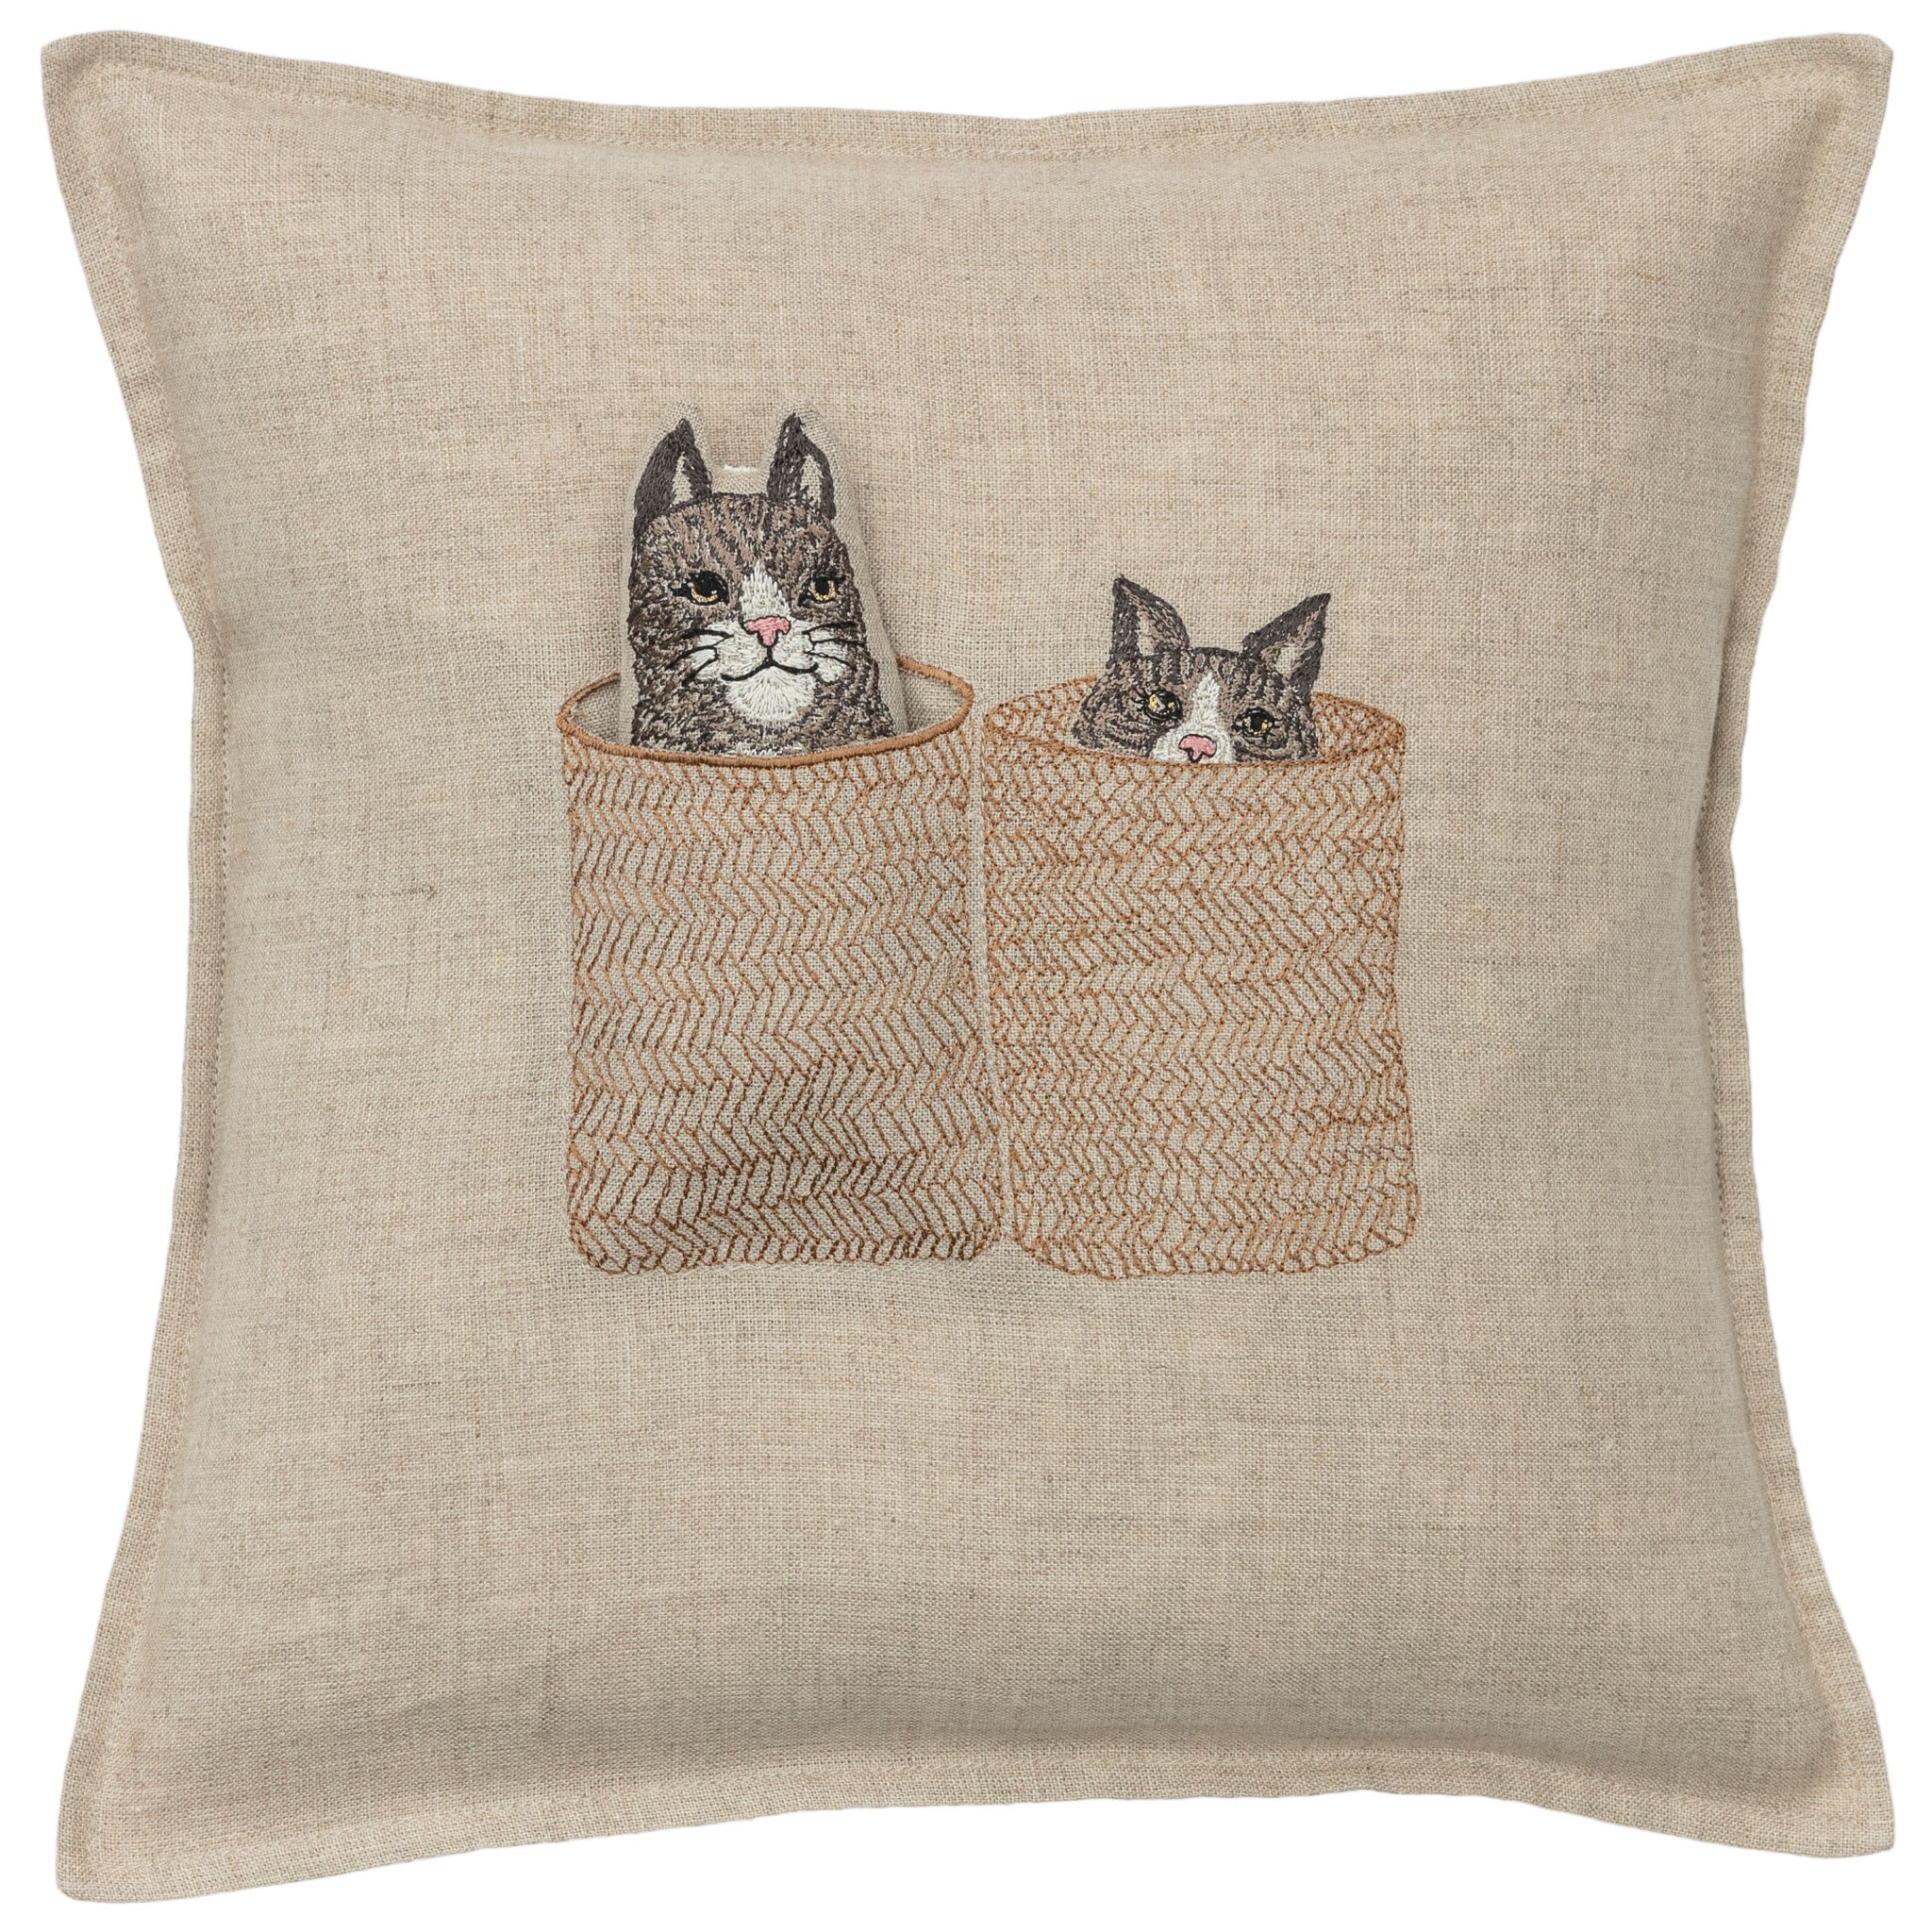 Basket Cats Pocket Pillow